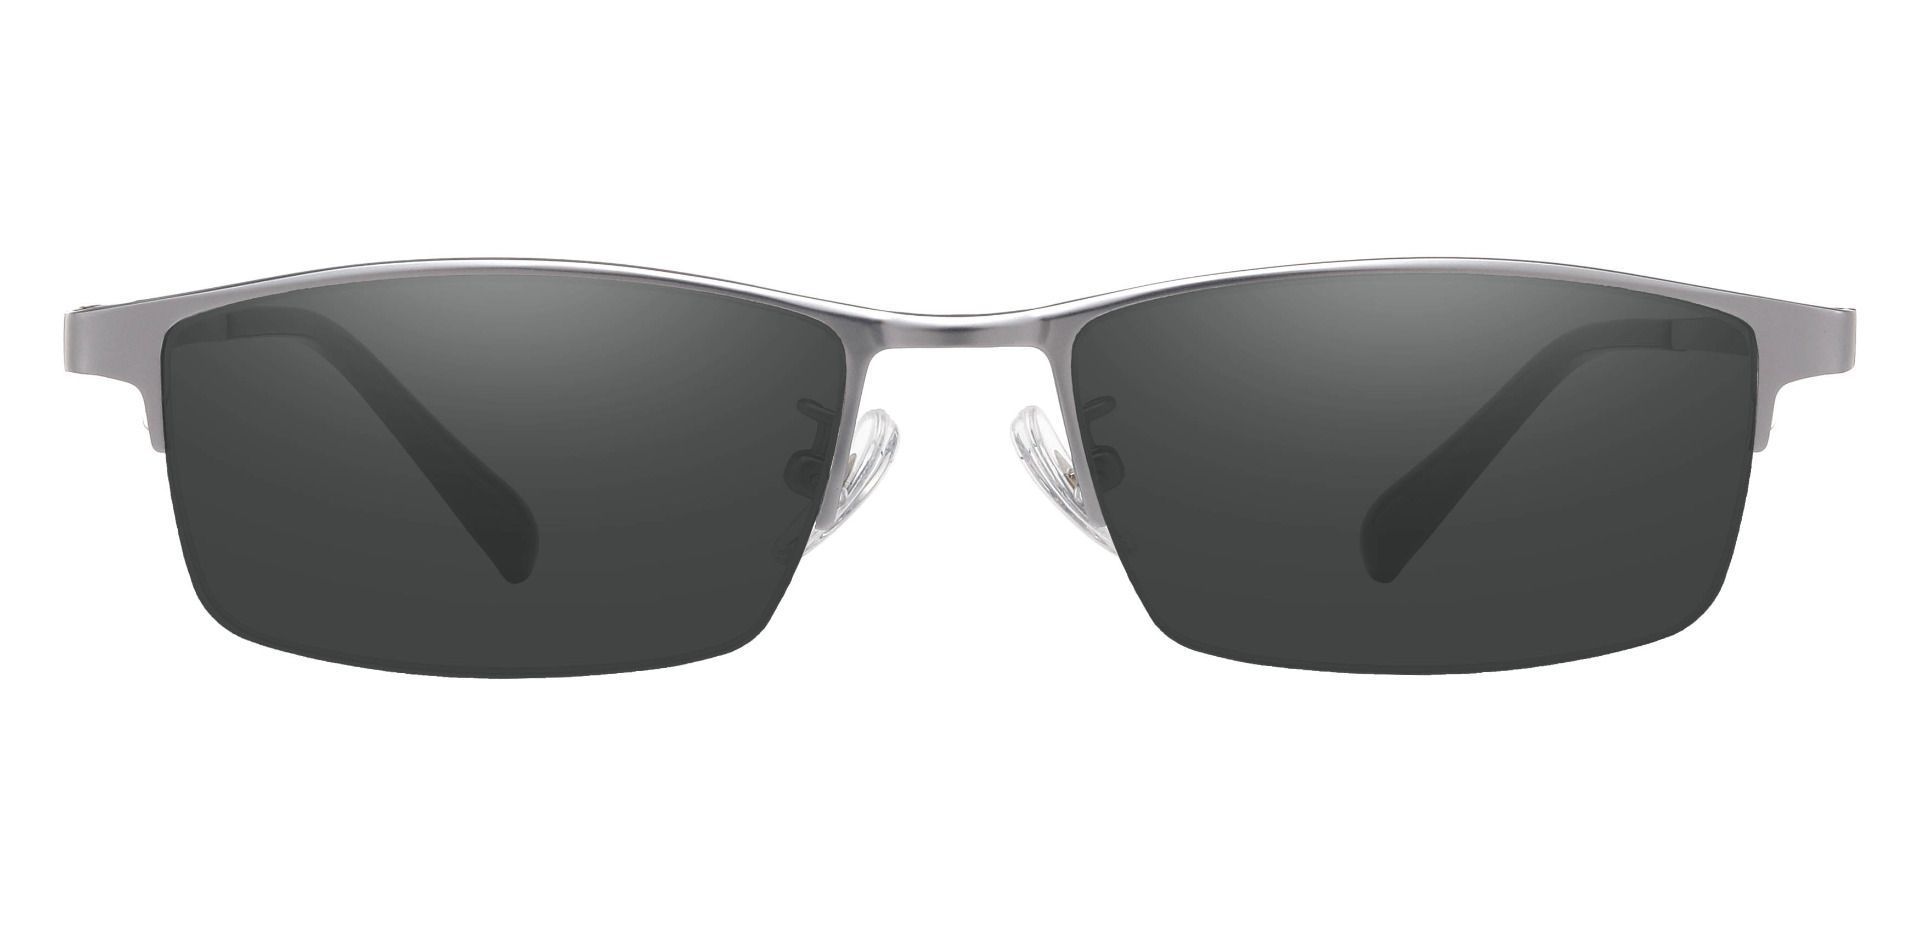 Burlington Rectangle Prescription Sunglasses - Silver Frame With Gray Lenses